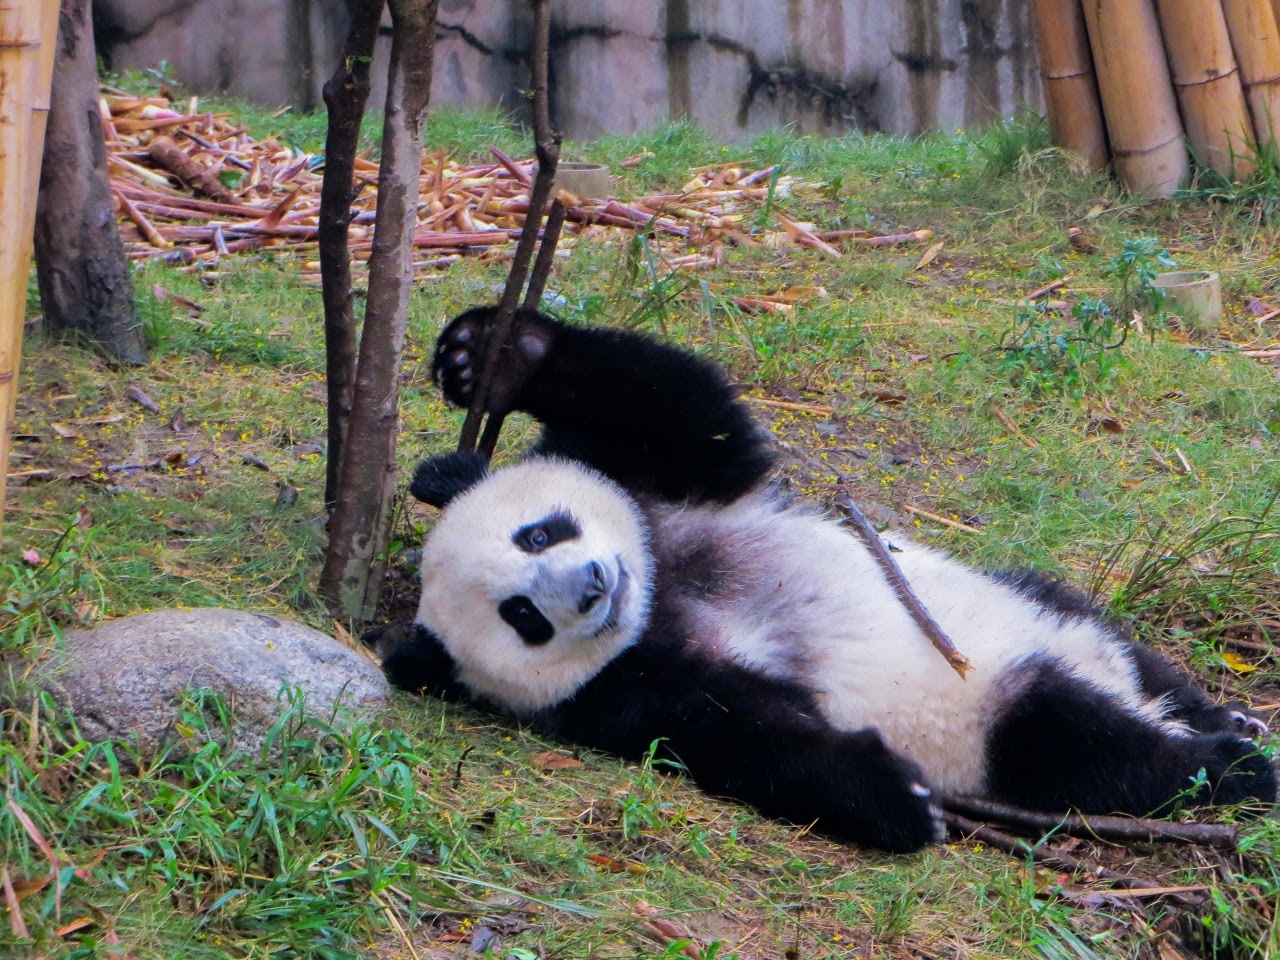 Este adorável panda só quer brincadeira